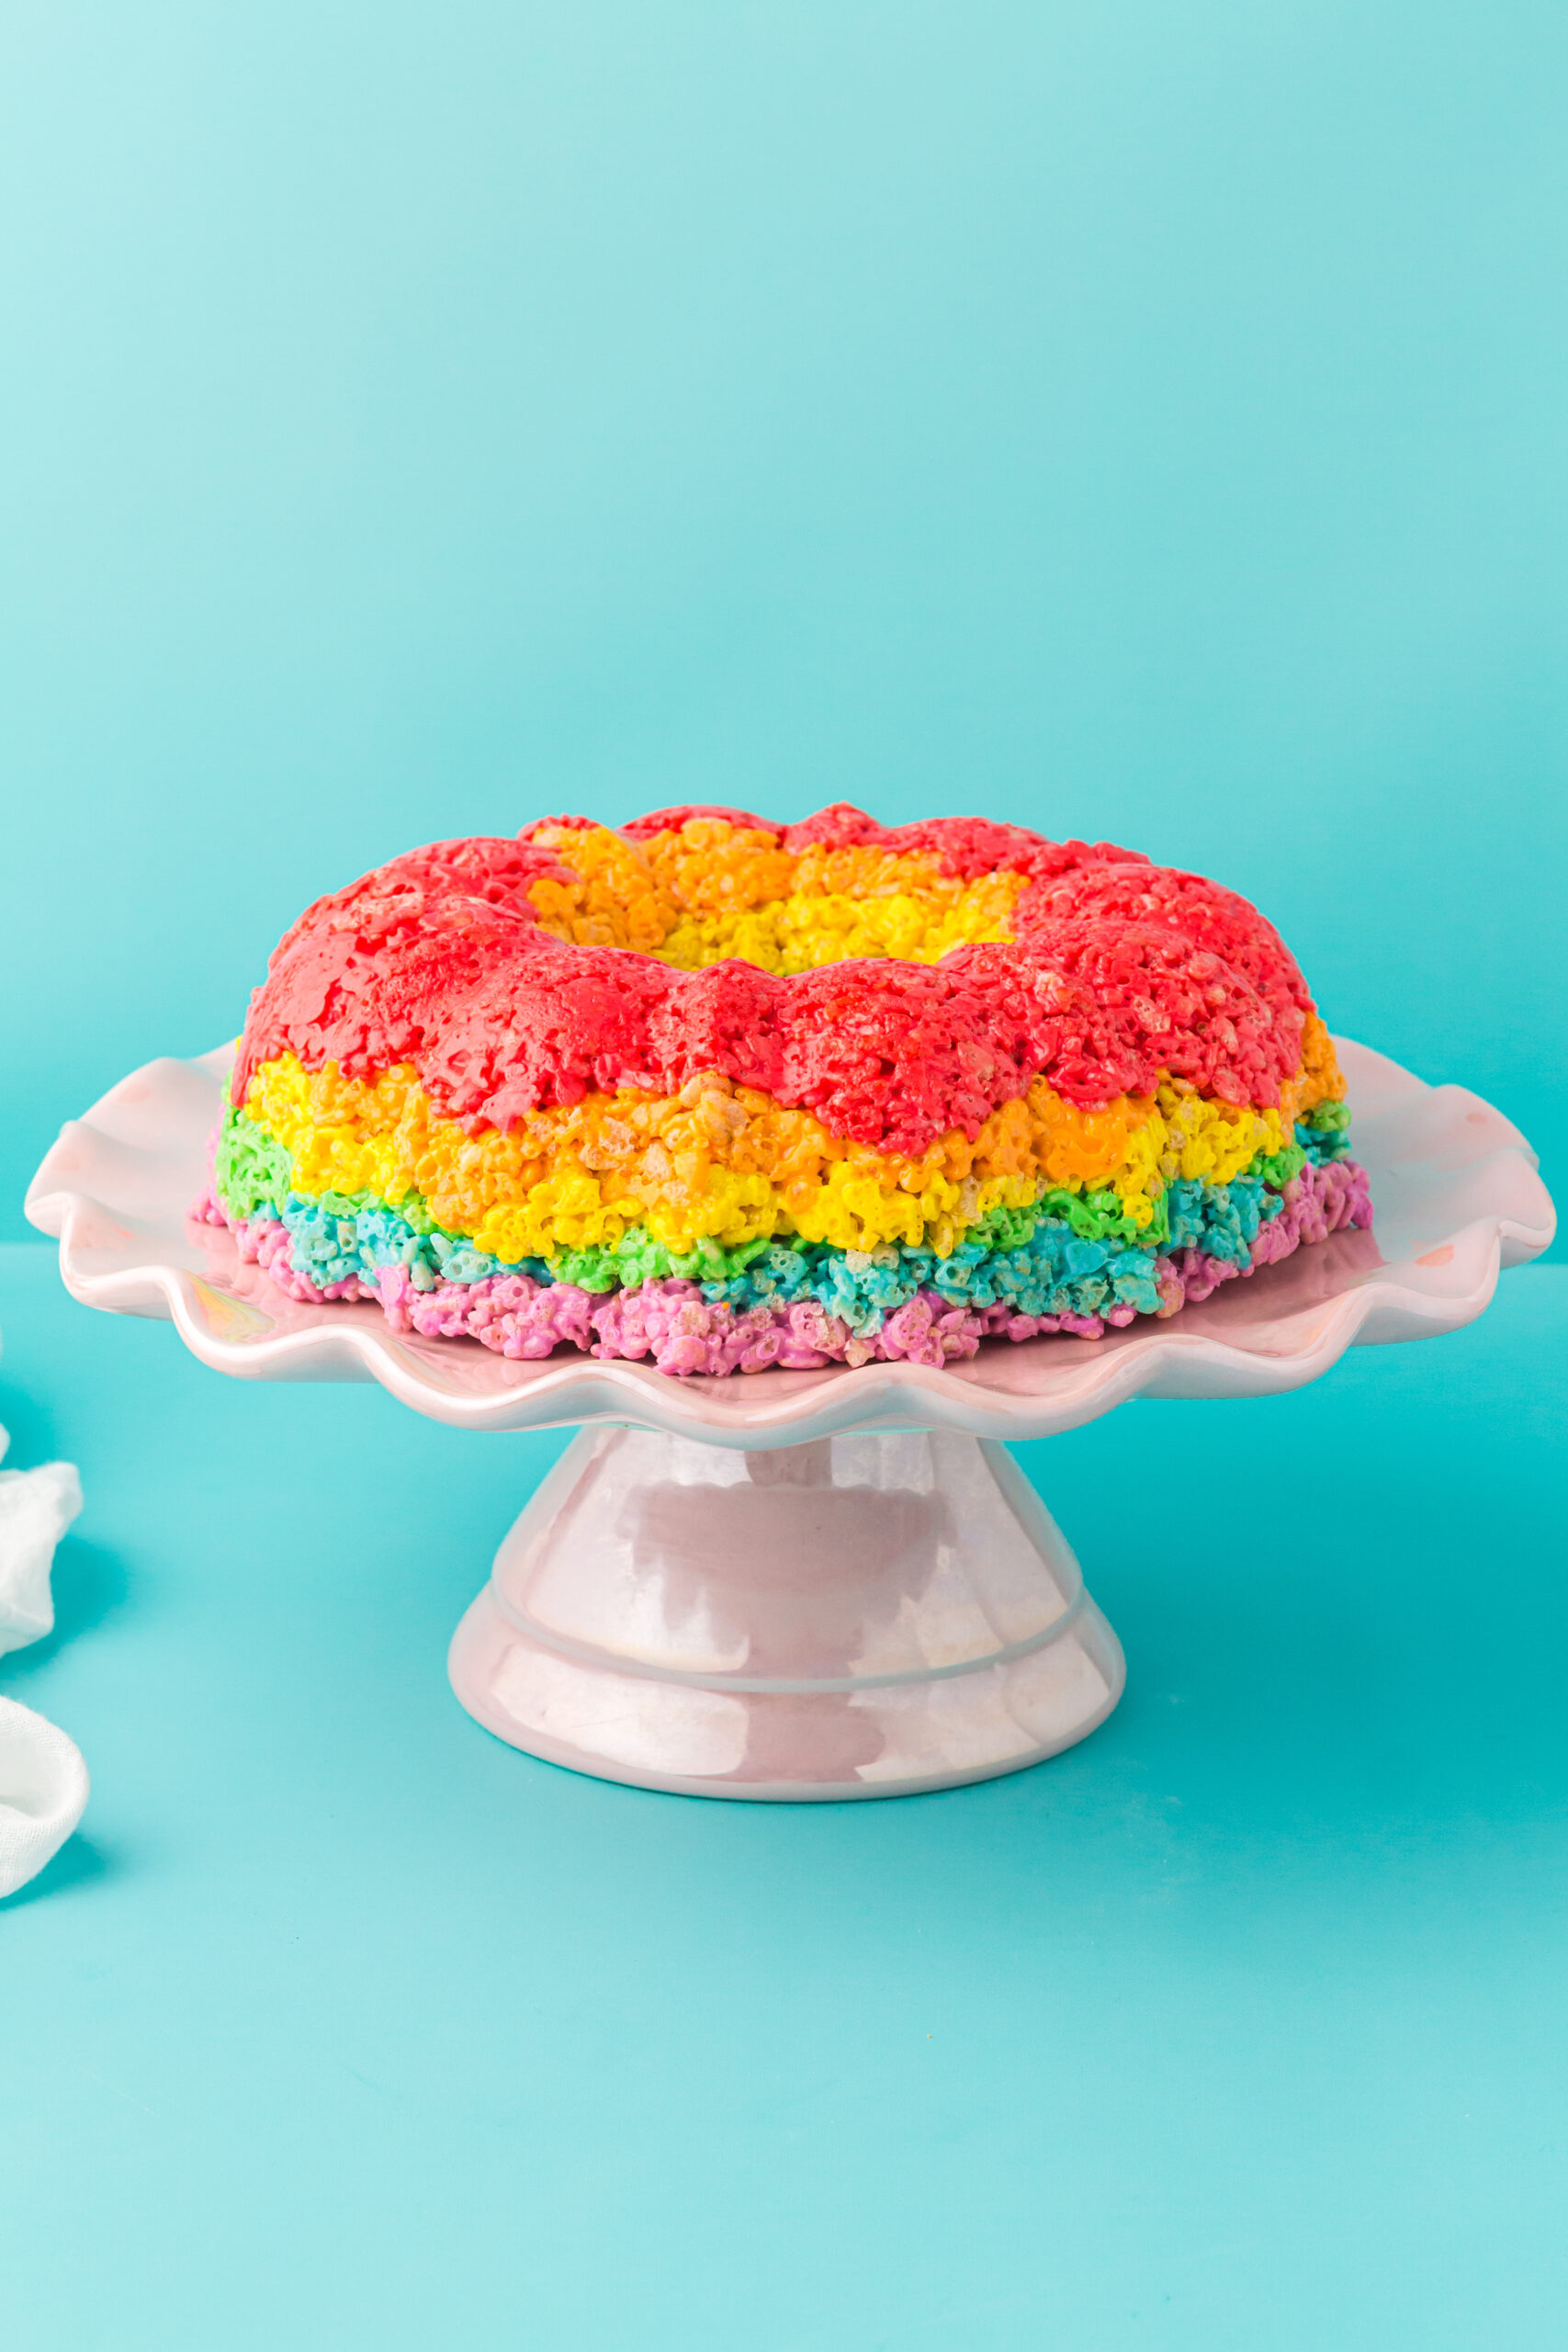 pretty rainbow bundt cake made using rice krispies cereal